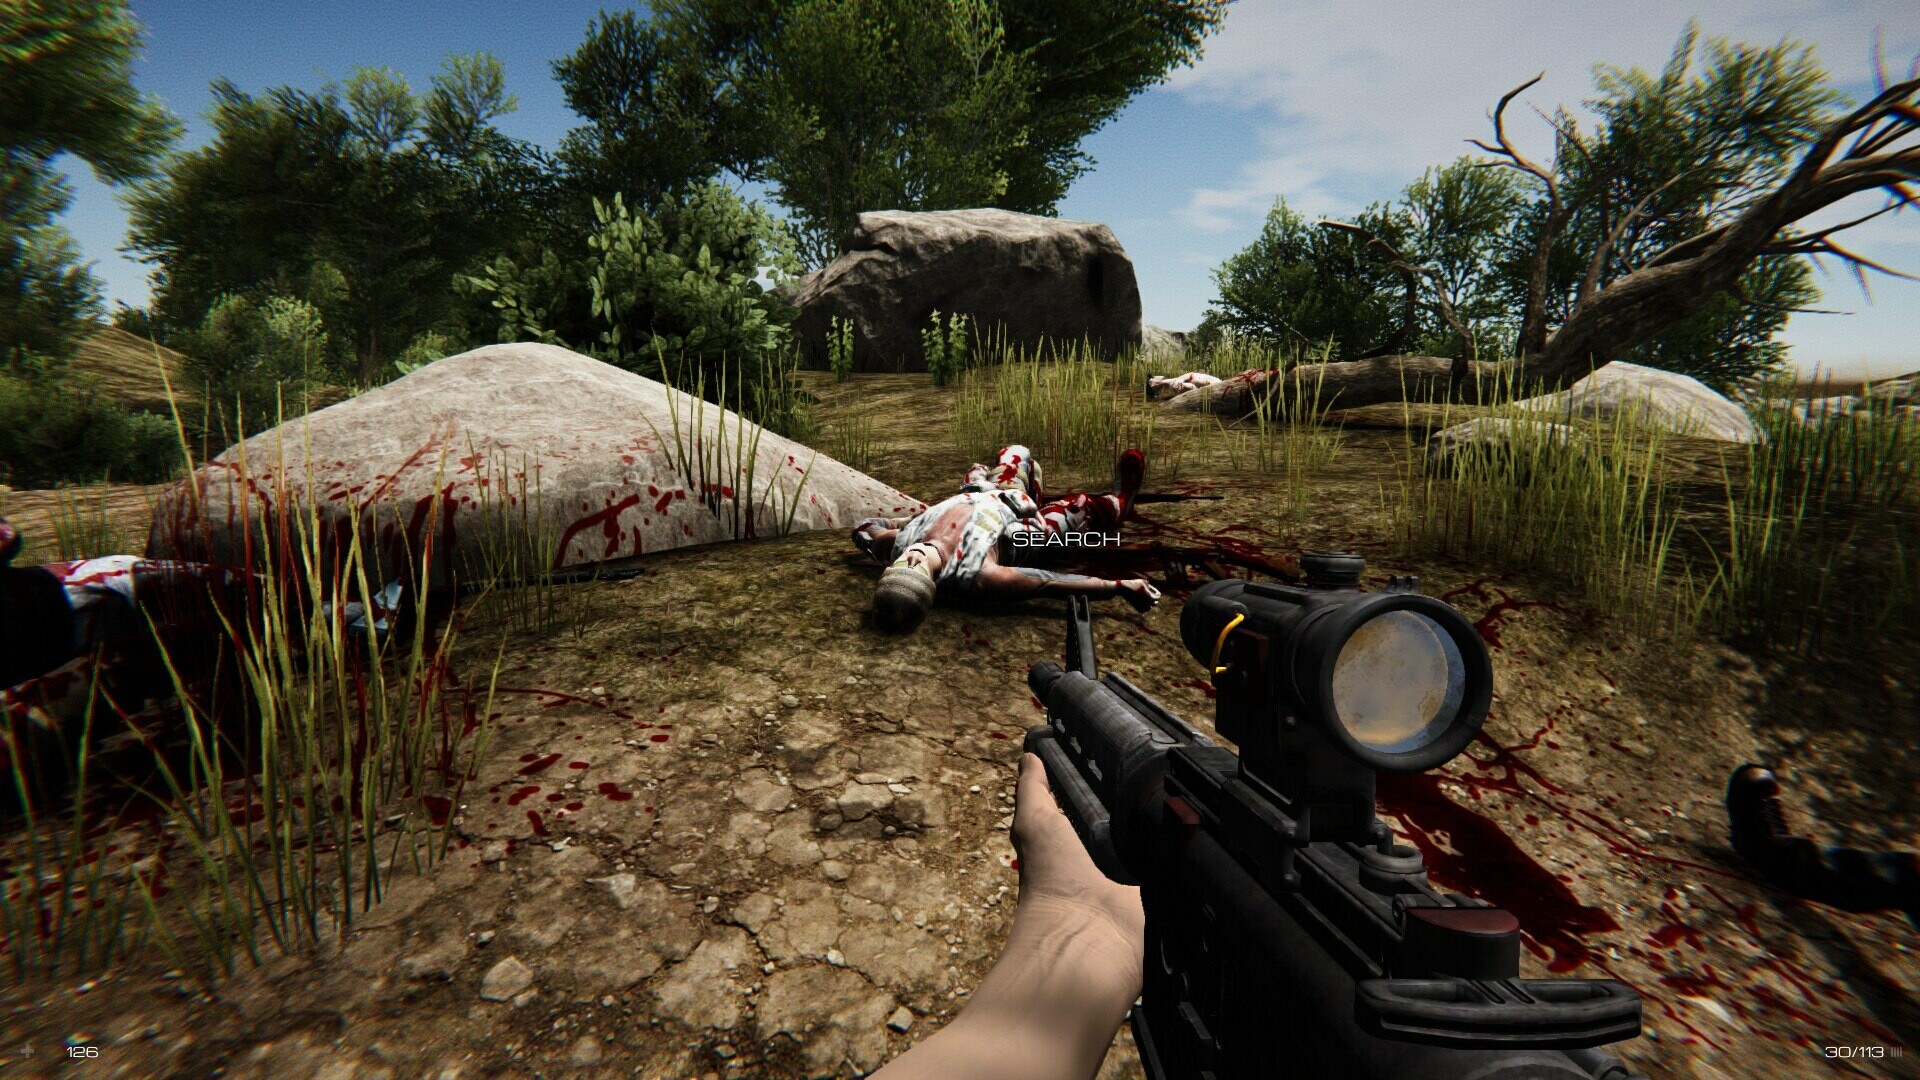 Far Cry 2 GAME MOD Hunter's Far Cry 2 Update Steam v.Final